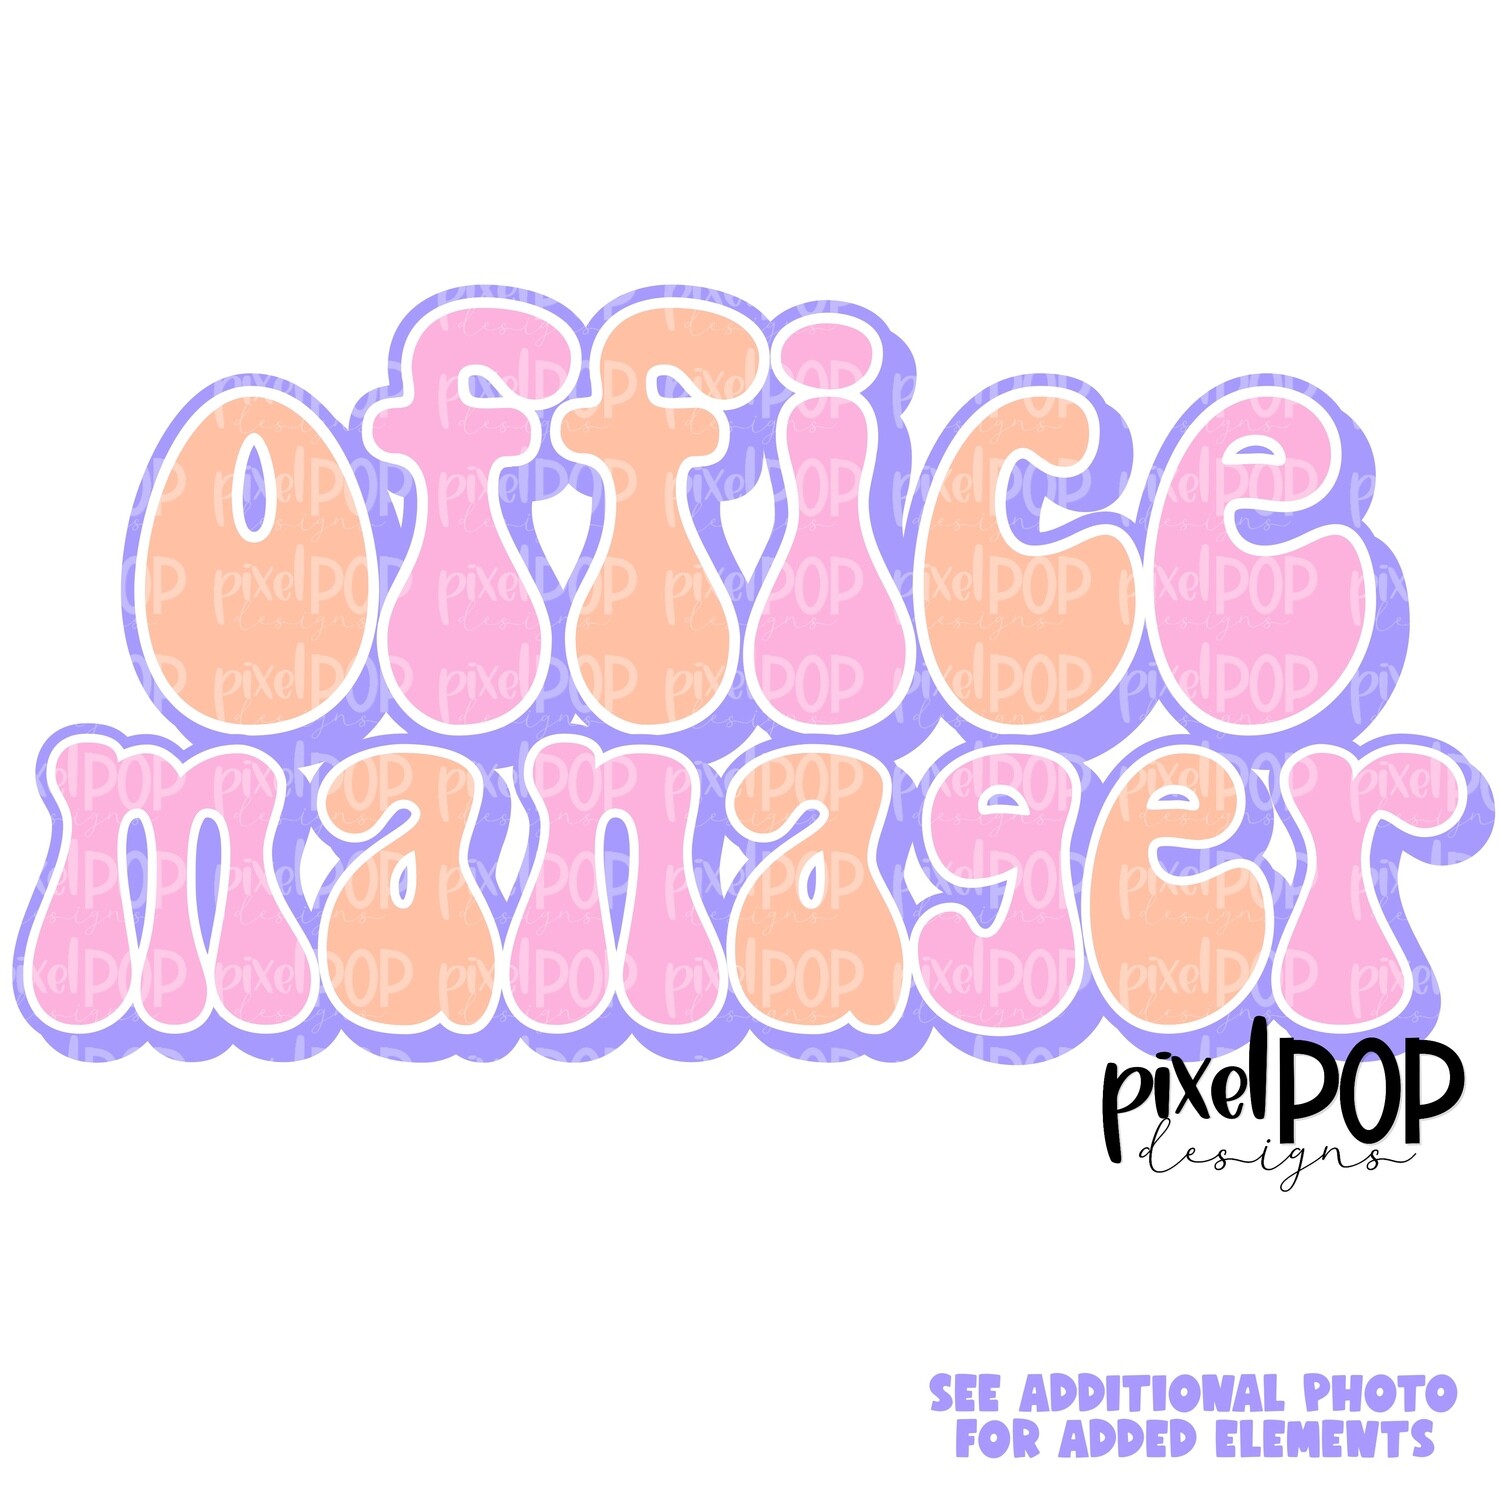 Retro Occupations Office Manager PNG Image Sublimation Art | Hand Drawn Art | Digital Design Download | Clip Art